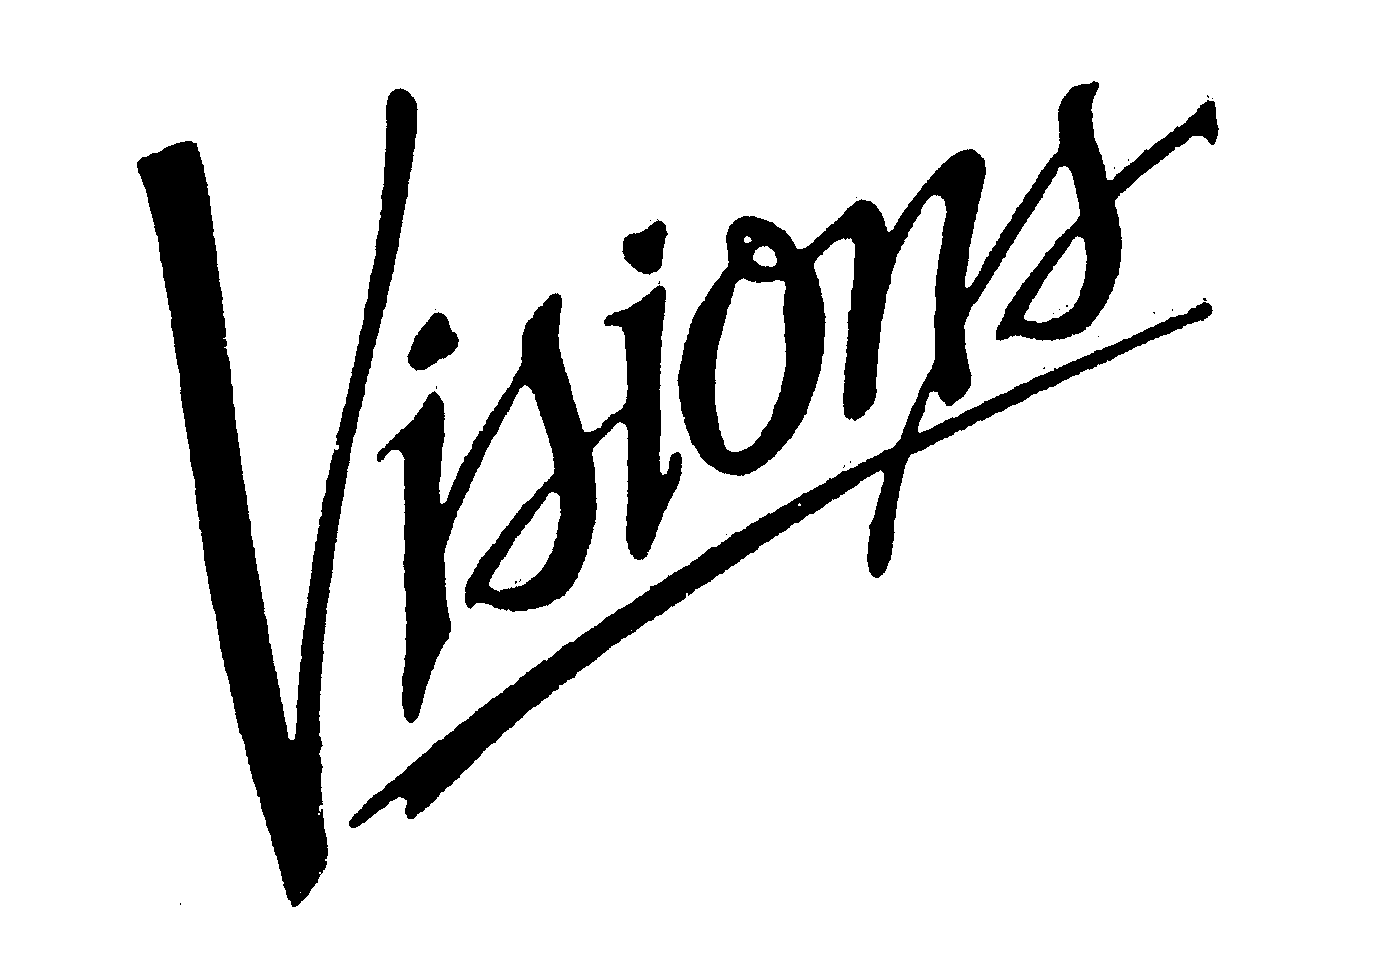 Trademark Logo VISIONS